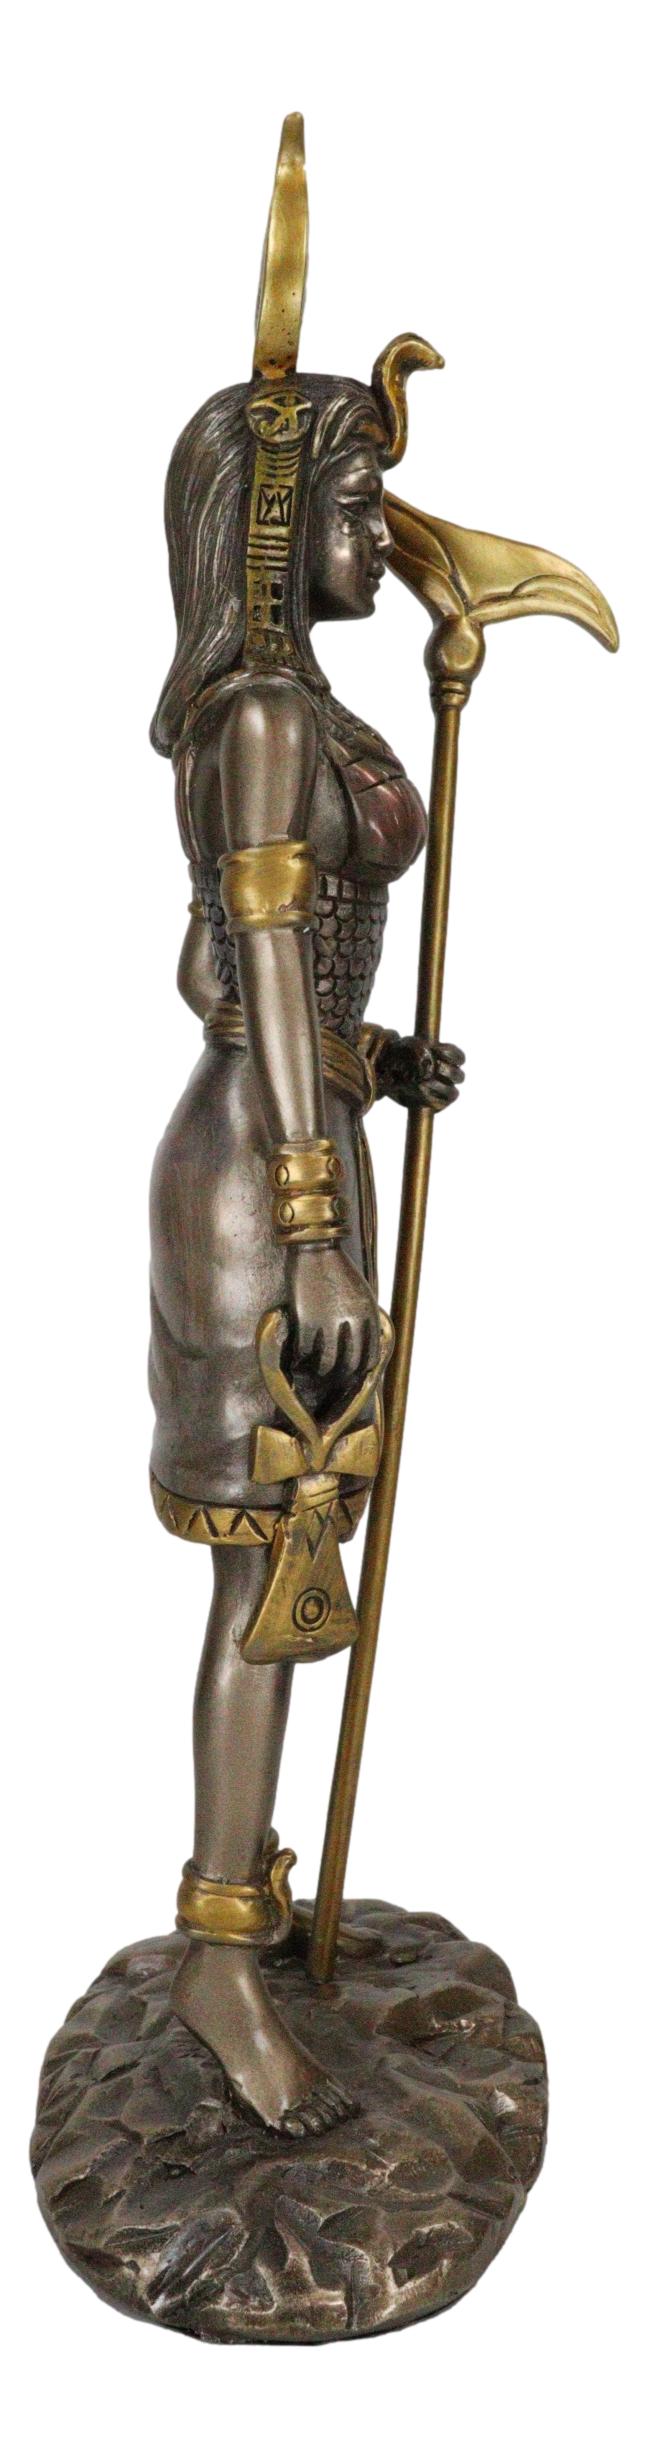 Egyptian Goddess of Motherhood Sky Love Arts Hathor Ra Holding Staff Figurine